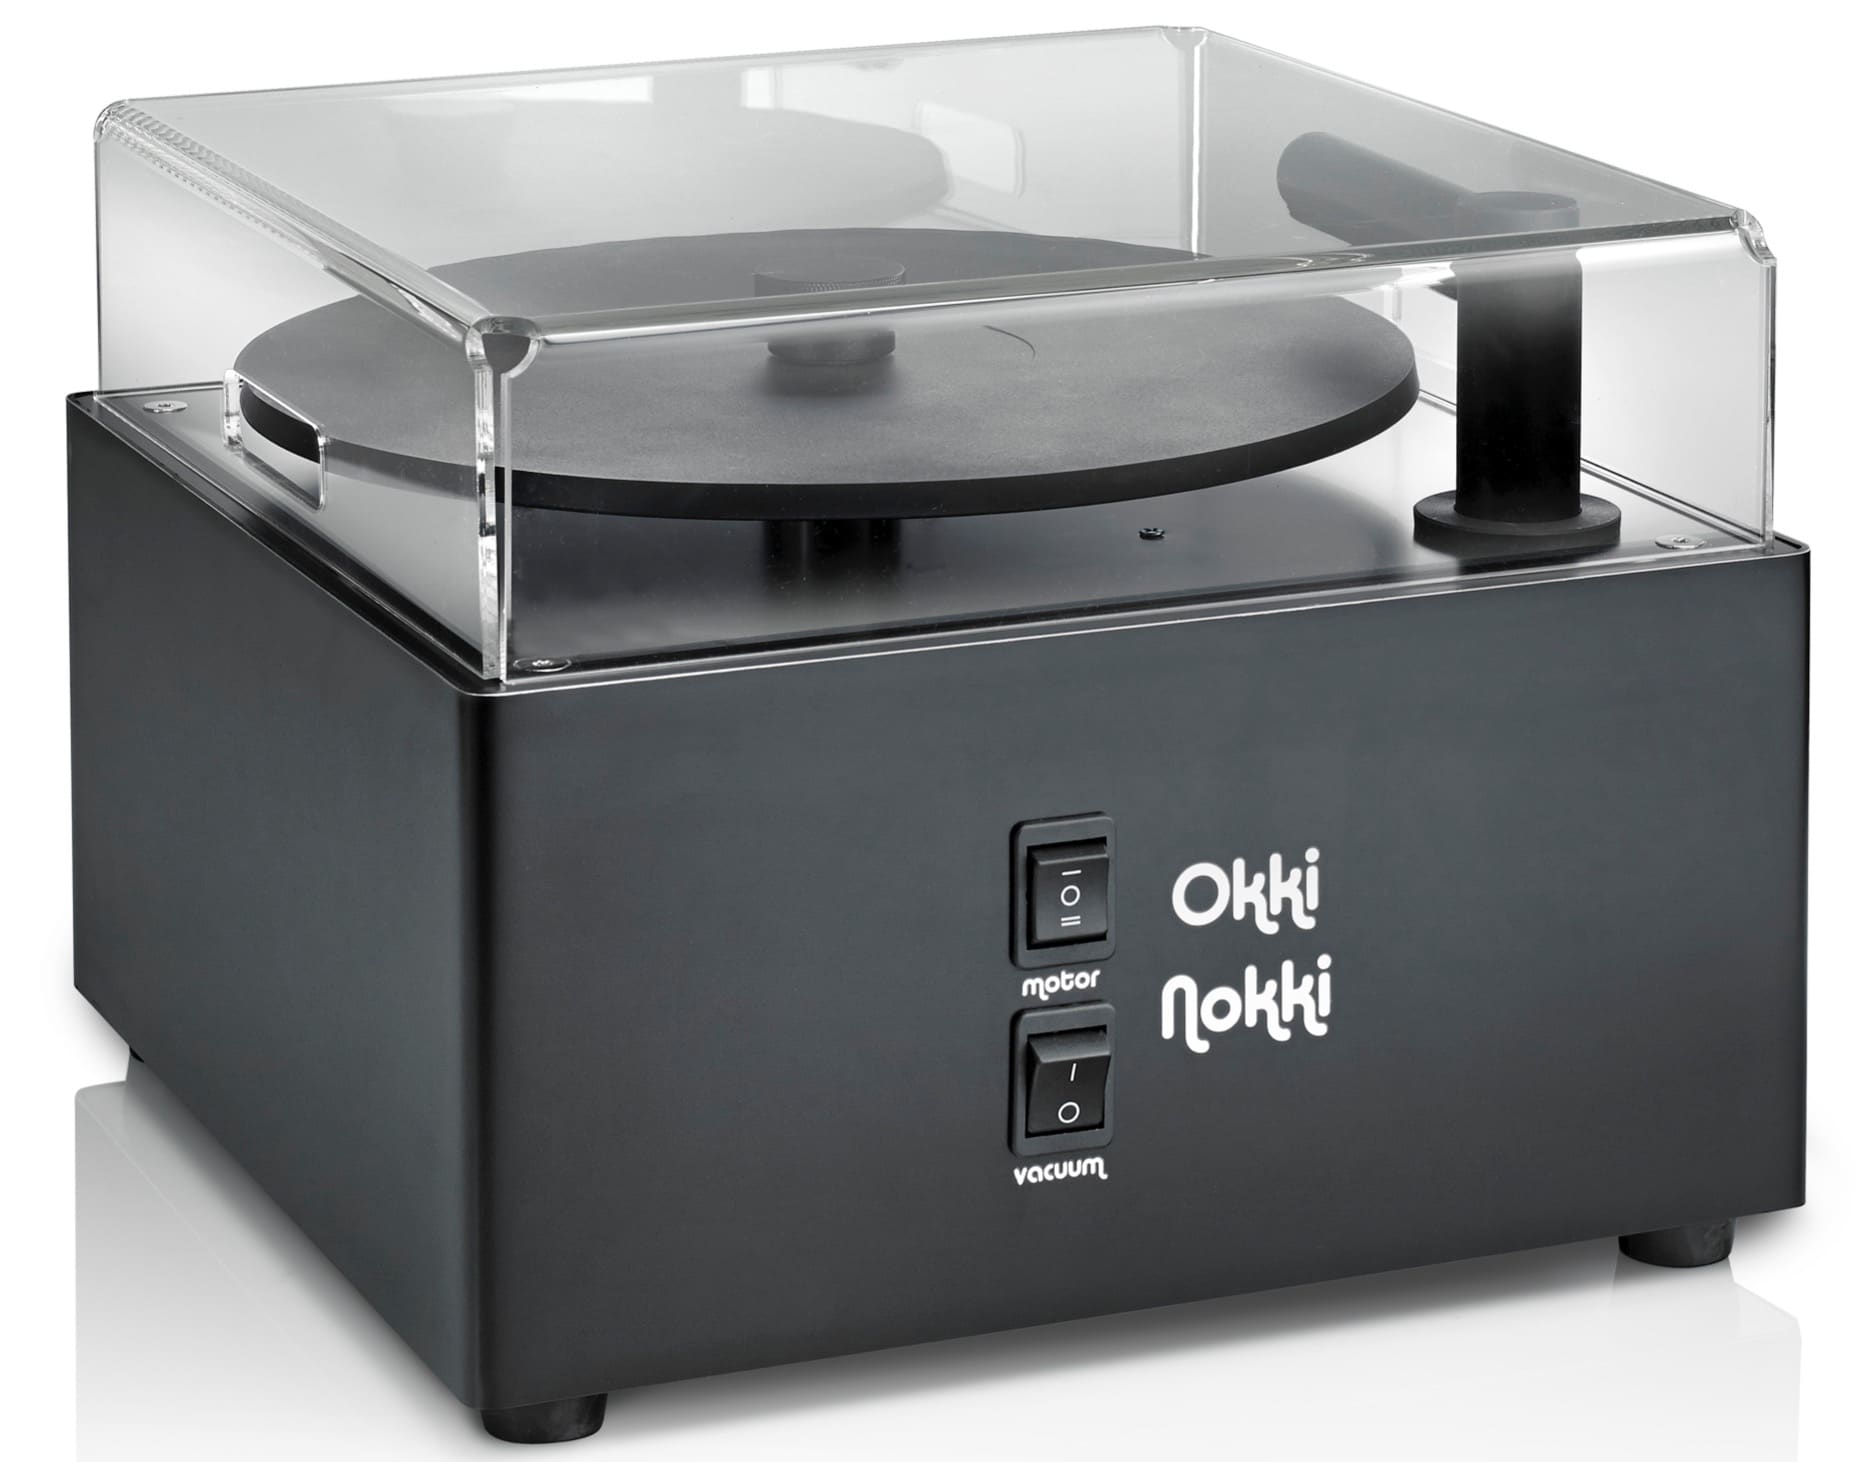 Okki Nokki record cleaning machine